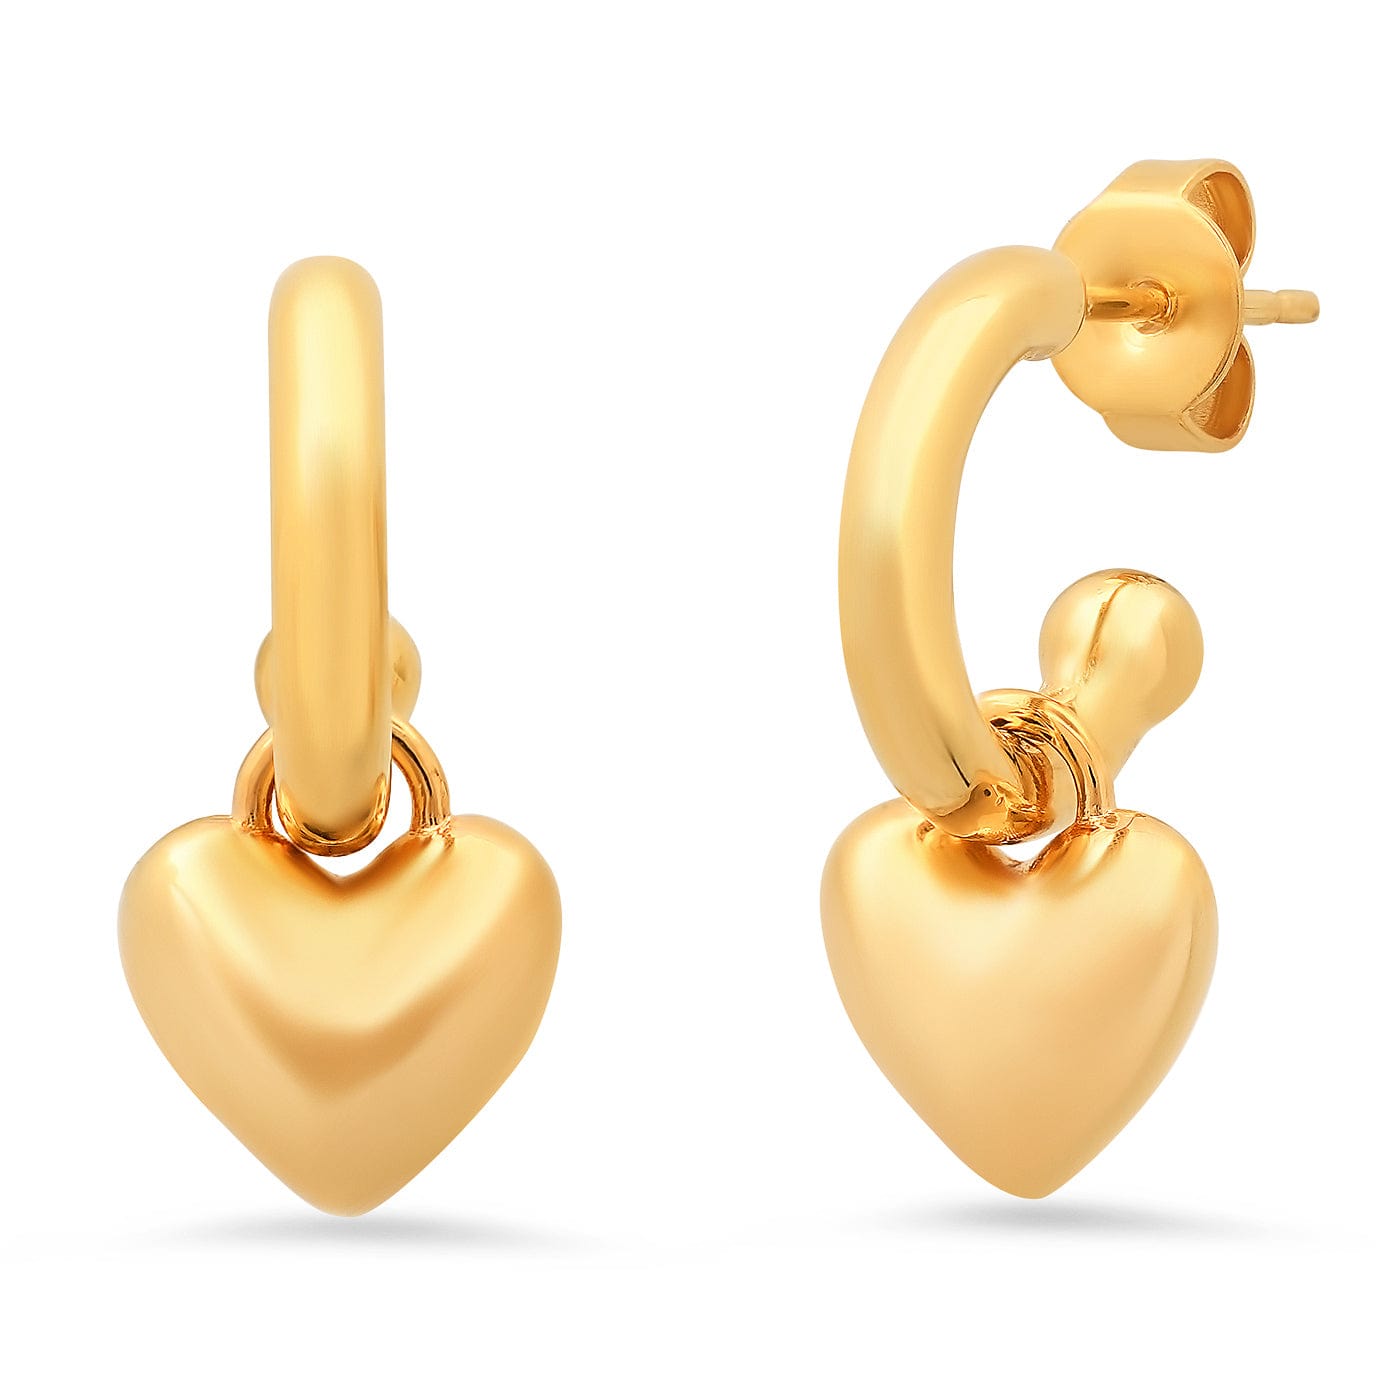 TAI JEWELRY Earrings Puffed Heart Charm Huggies